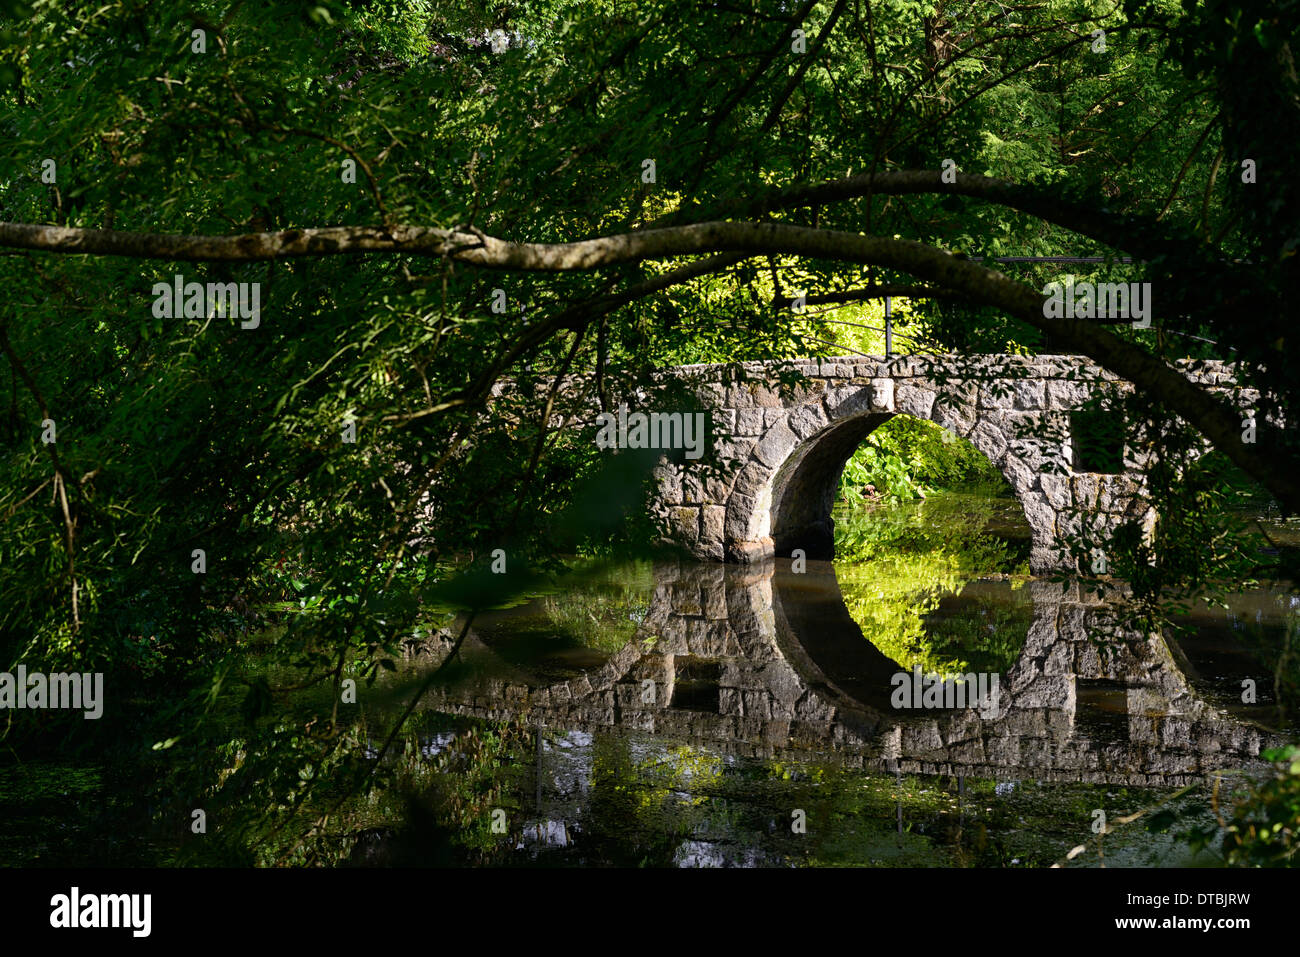 Stone arch bridge perfect reflection frame framed tree branch conifer lake pond altamont gardens carlow Stock Photo